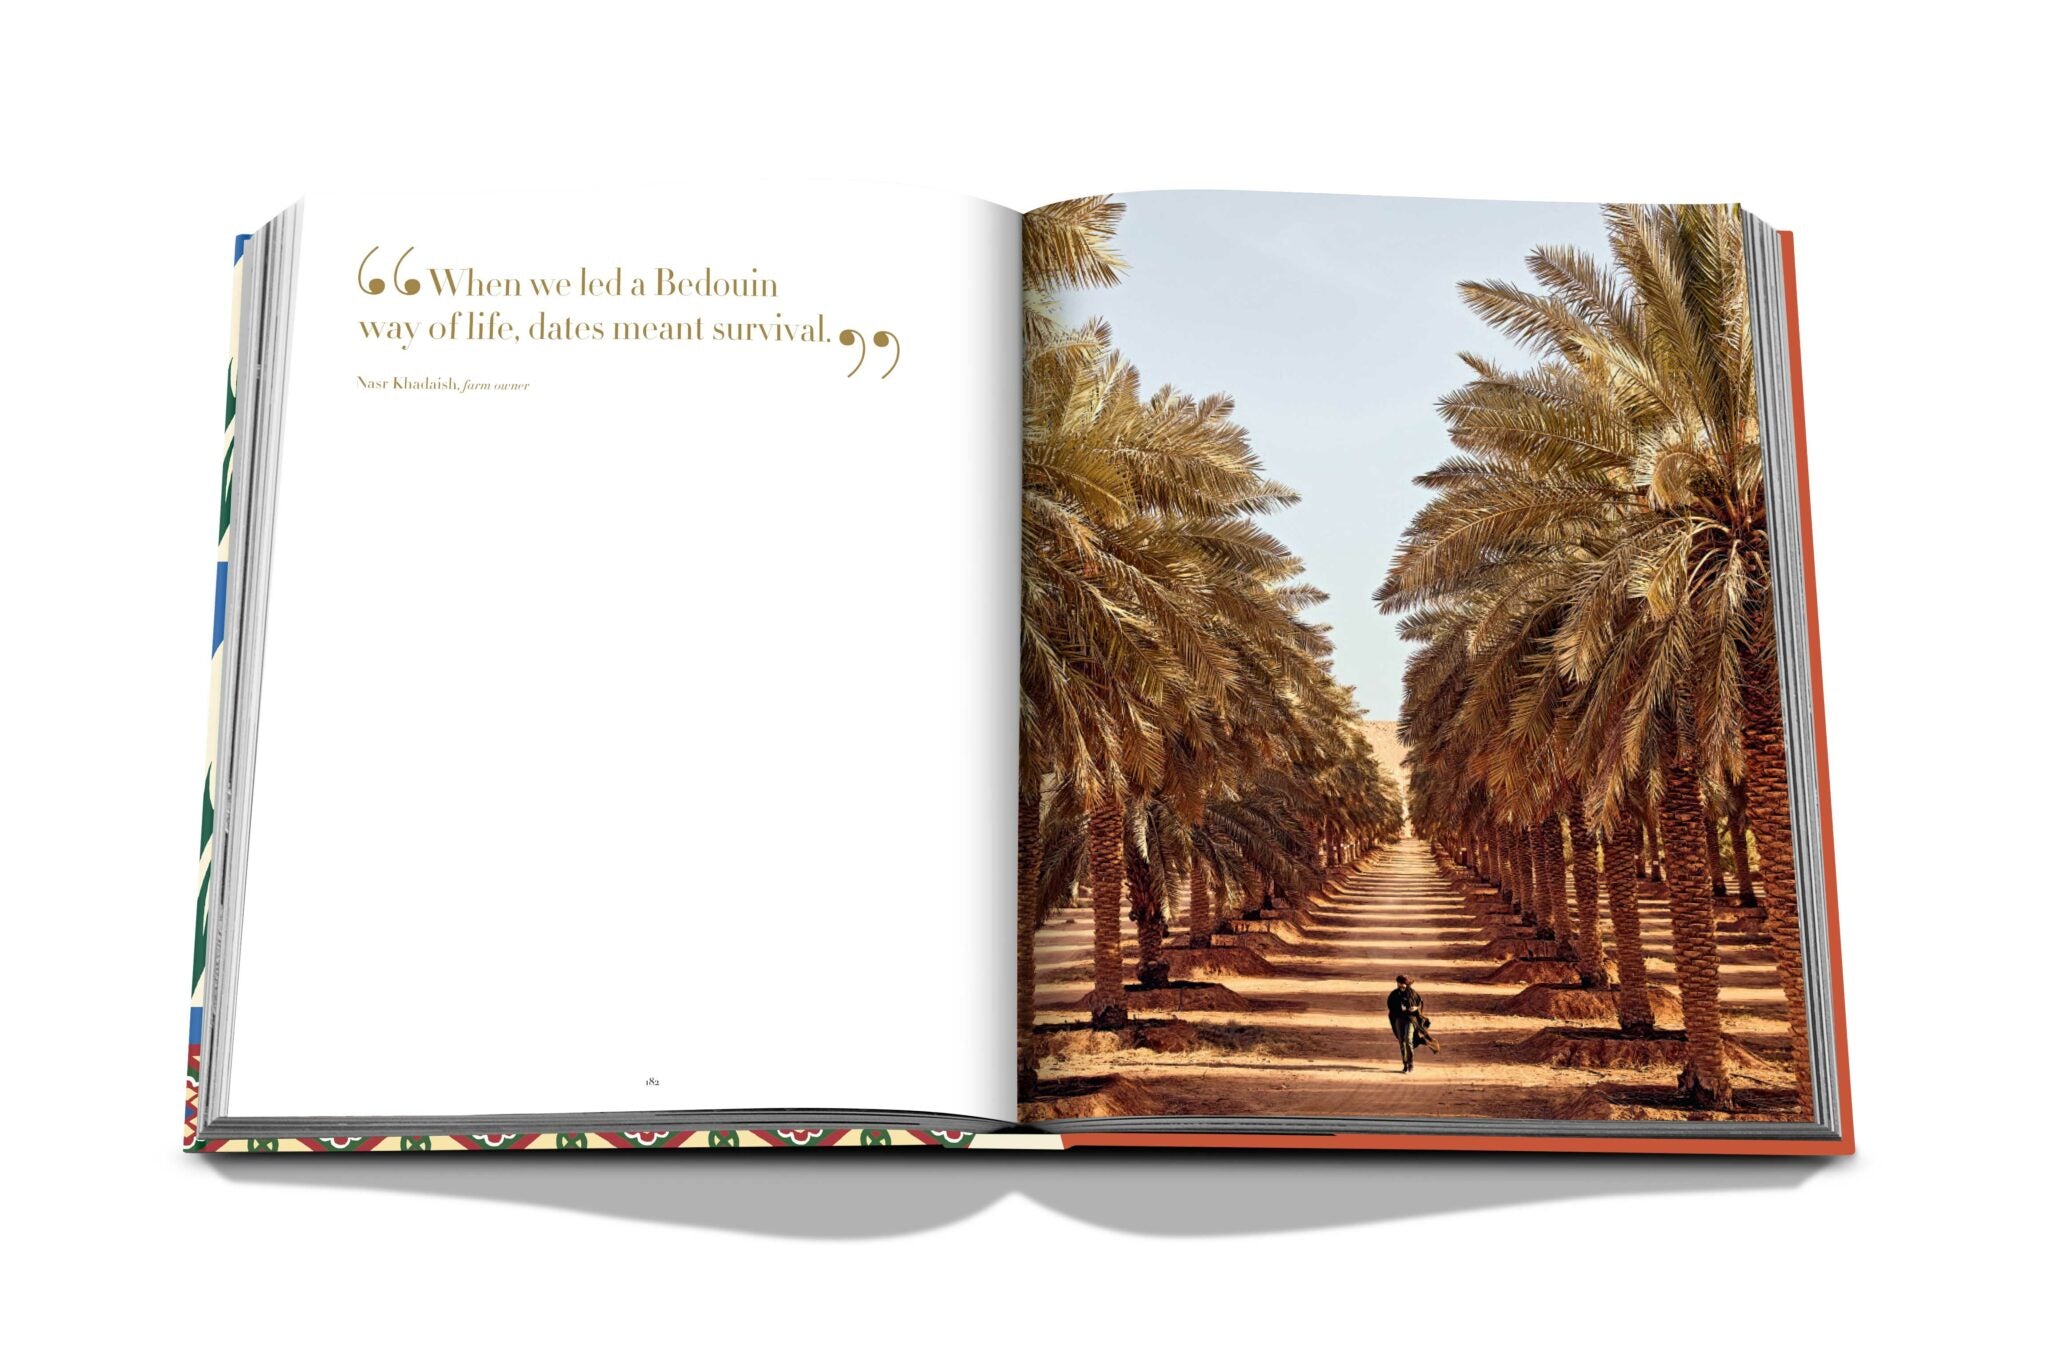 Fechas sauditas de Asnouline: un retrato de la fruta sagrada